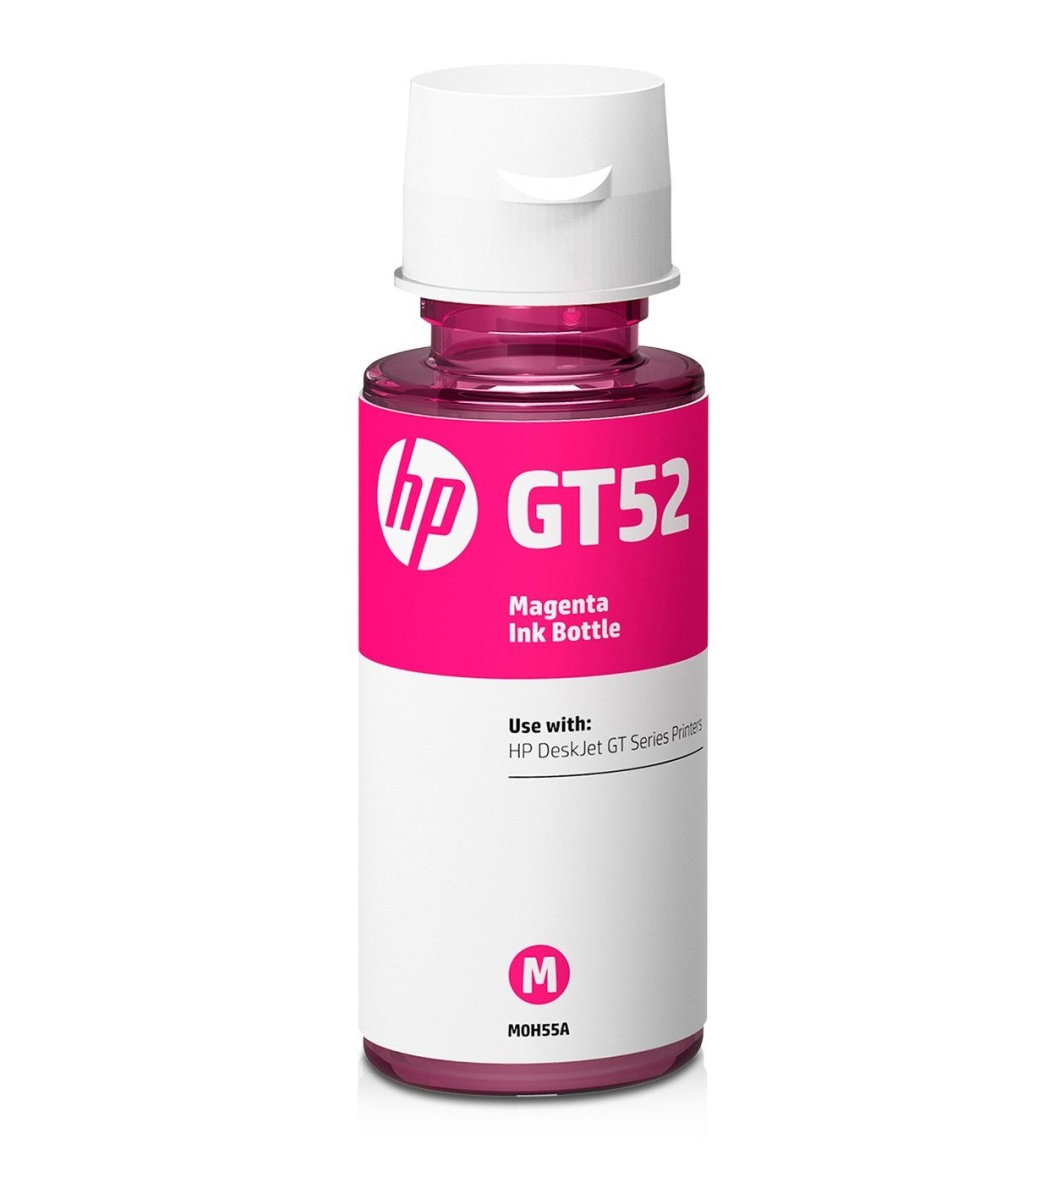 Fľaša atramentu HP GT52 - purpurová (M0H55AE)